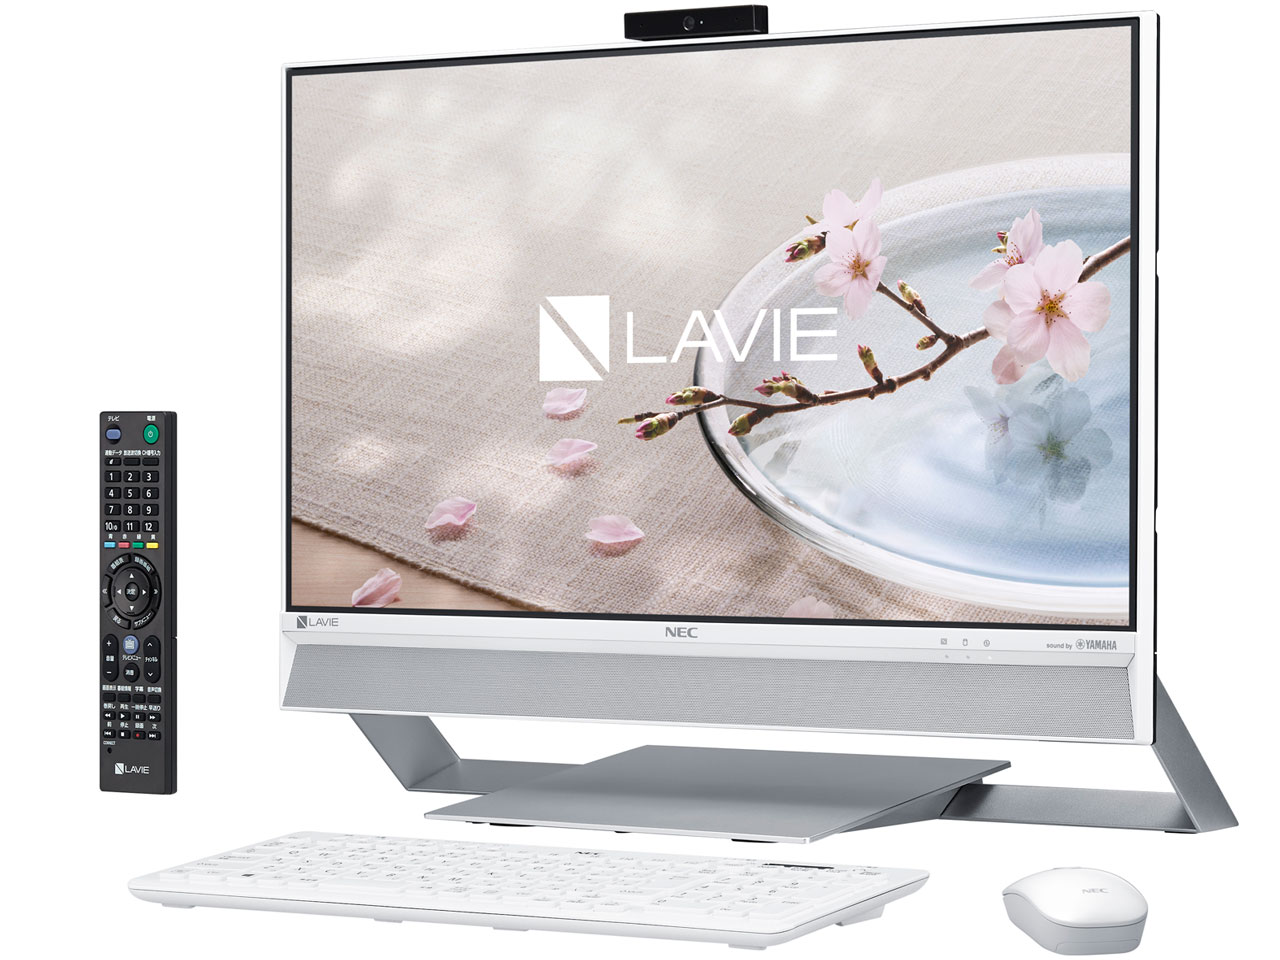 LAVIE Desk All-in-one DA770/DAW PC-DA770DAW [ファインホワイト] の製品画像